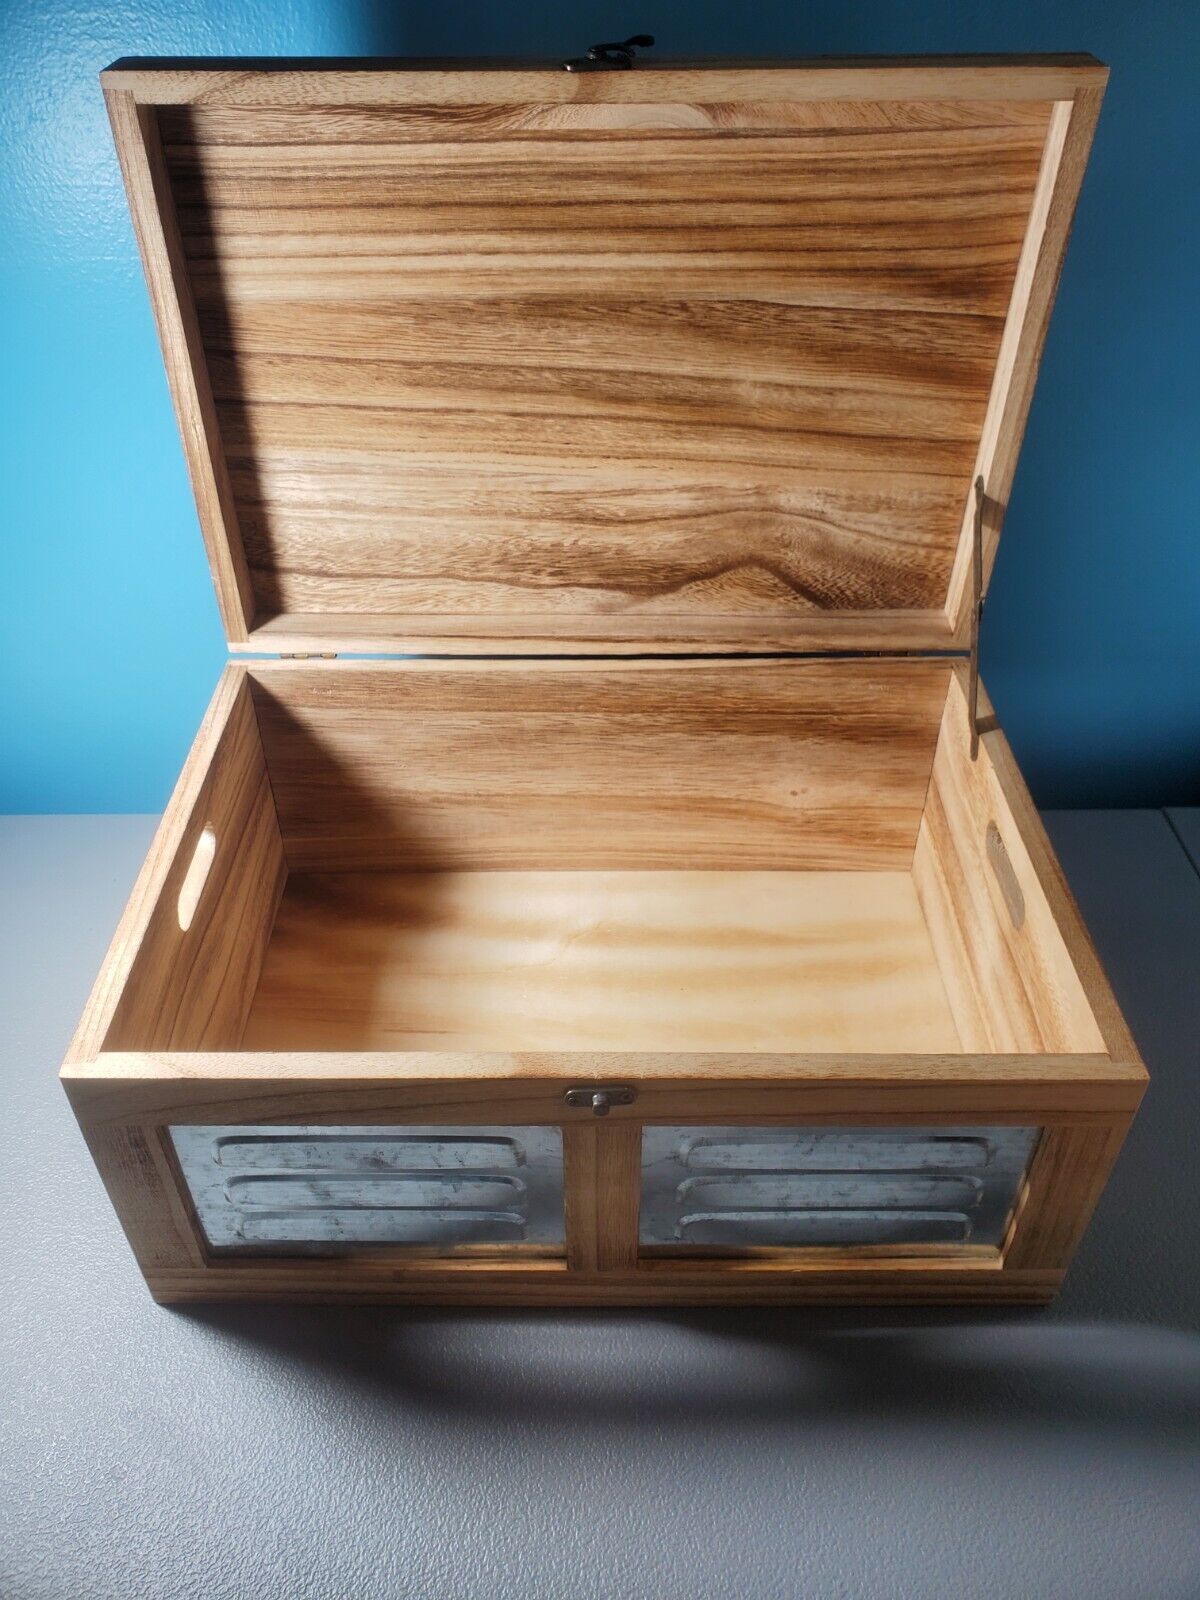 Large Wooden Box With Hinged Lid And Small Turn Lock - Keeepsake - Trinket - Box